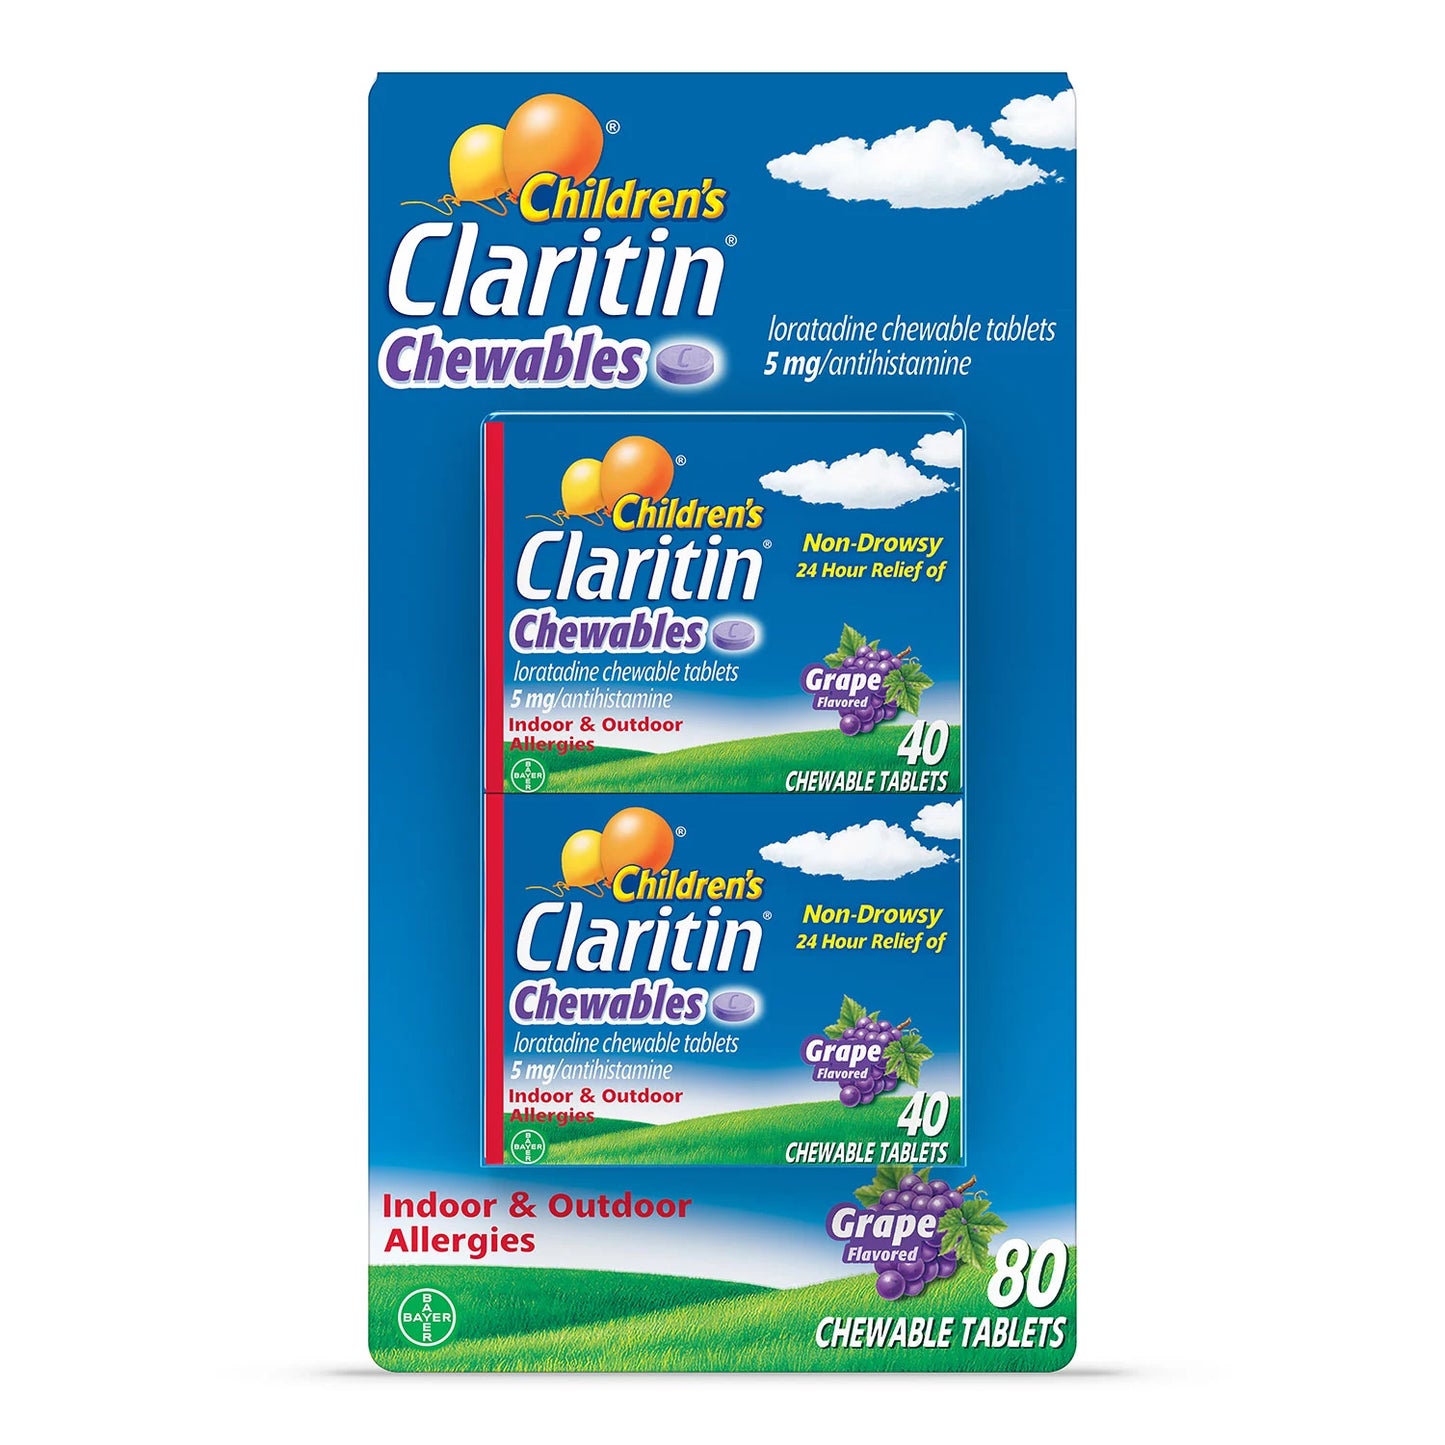 Children's Claritin Non-Drowsy 5mg. Chewable Tablets, Grape (2 pk., 40 ct./pk.)